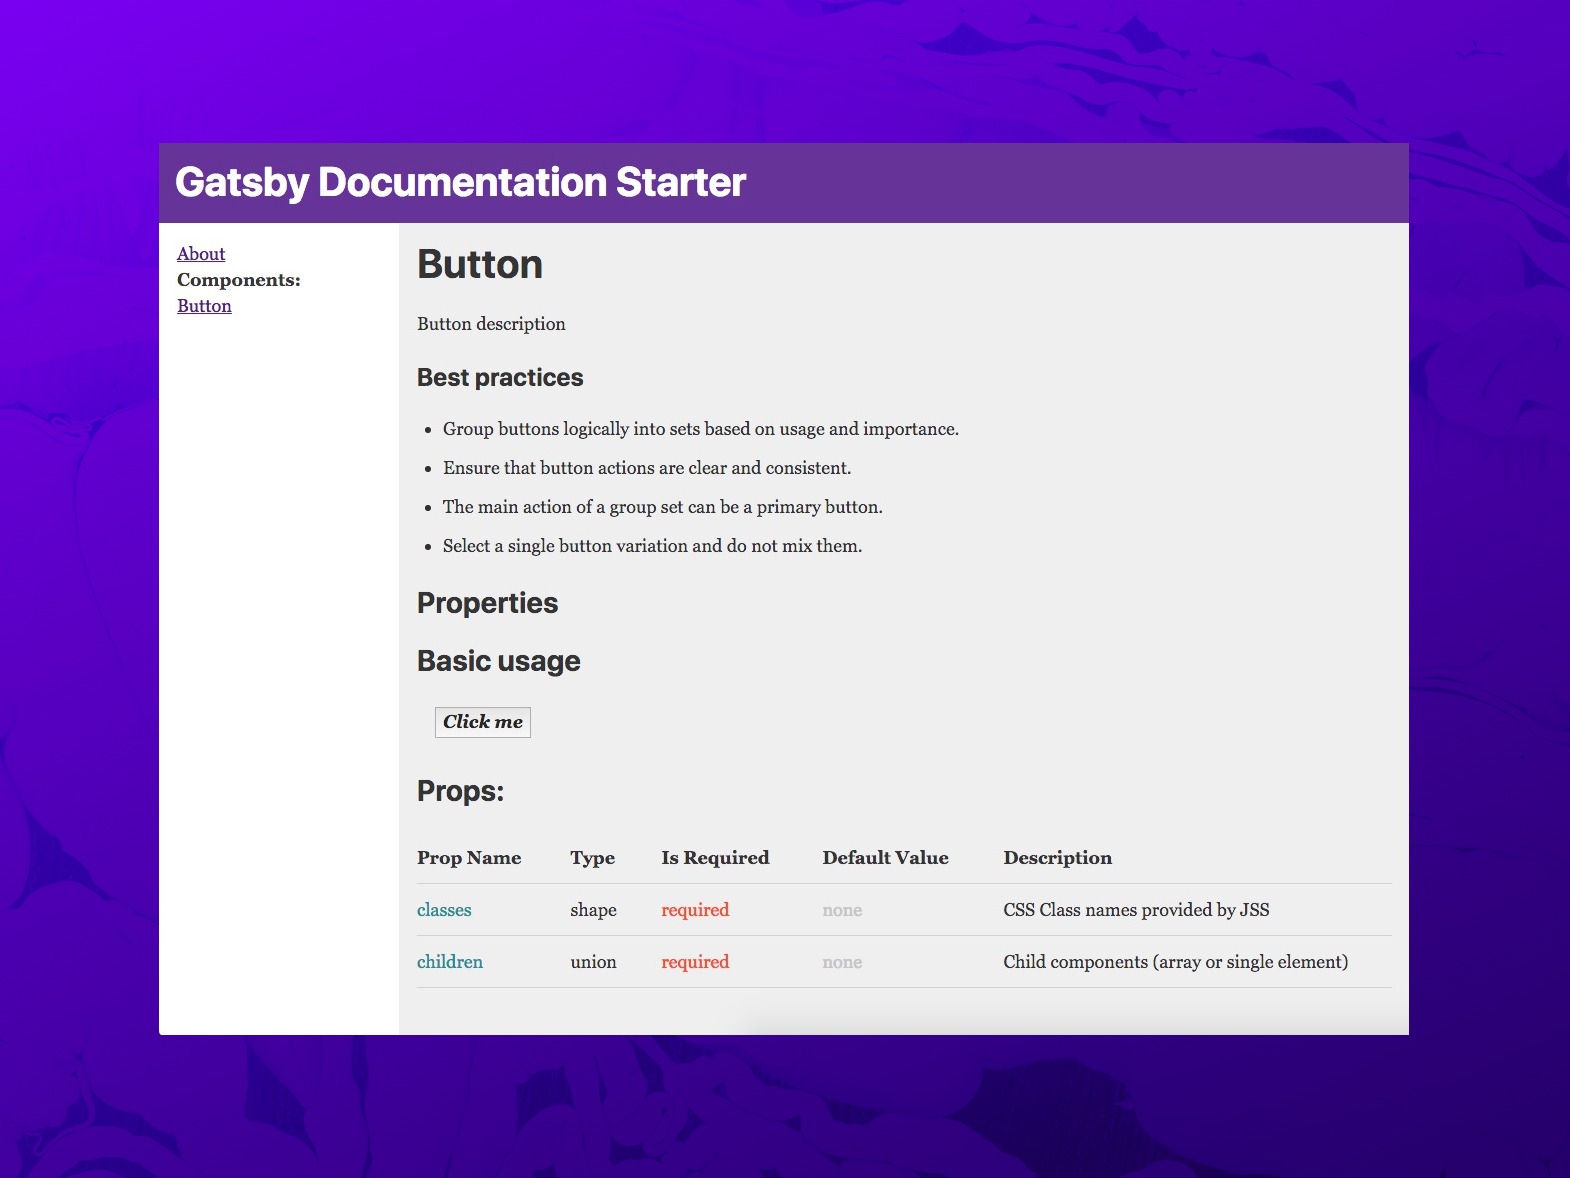 Gatsby Documentation Starter using gatsby-transformer-react-docgen